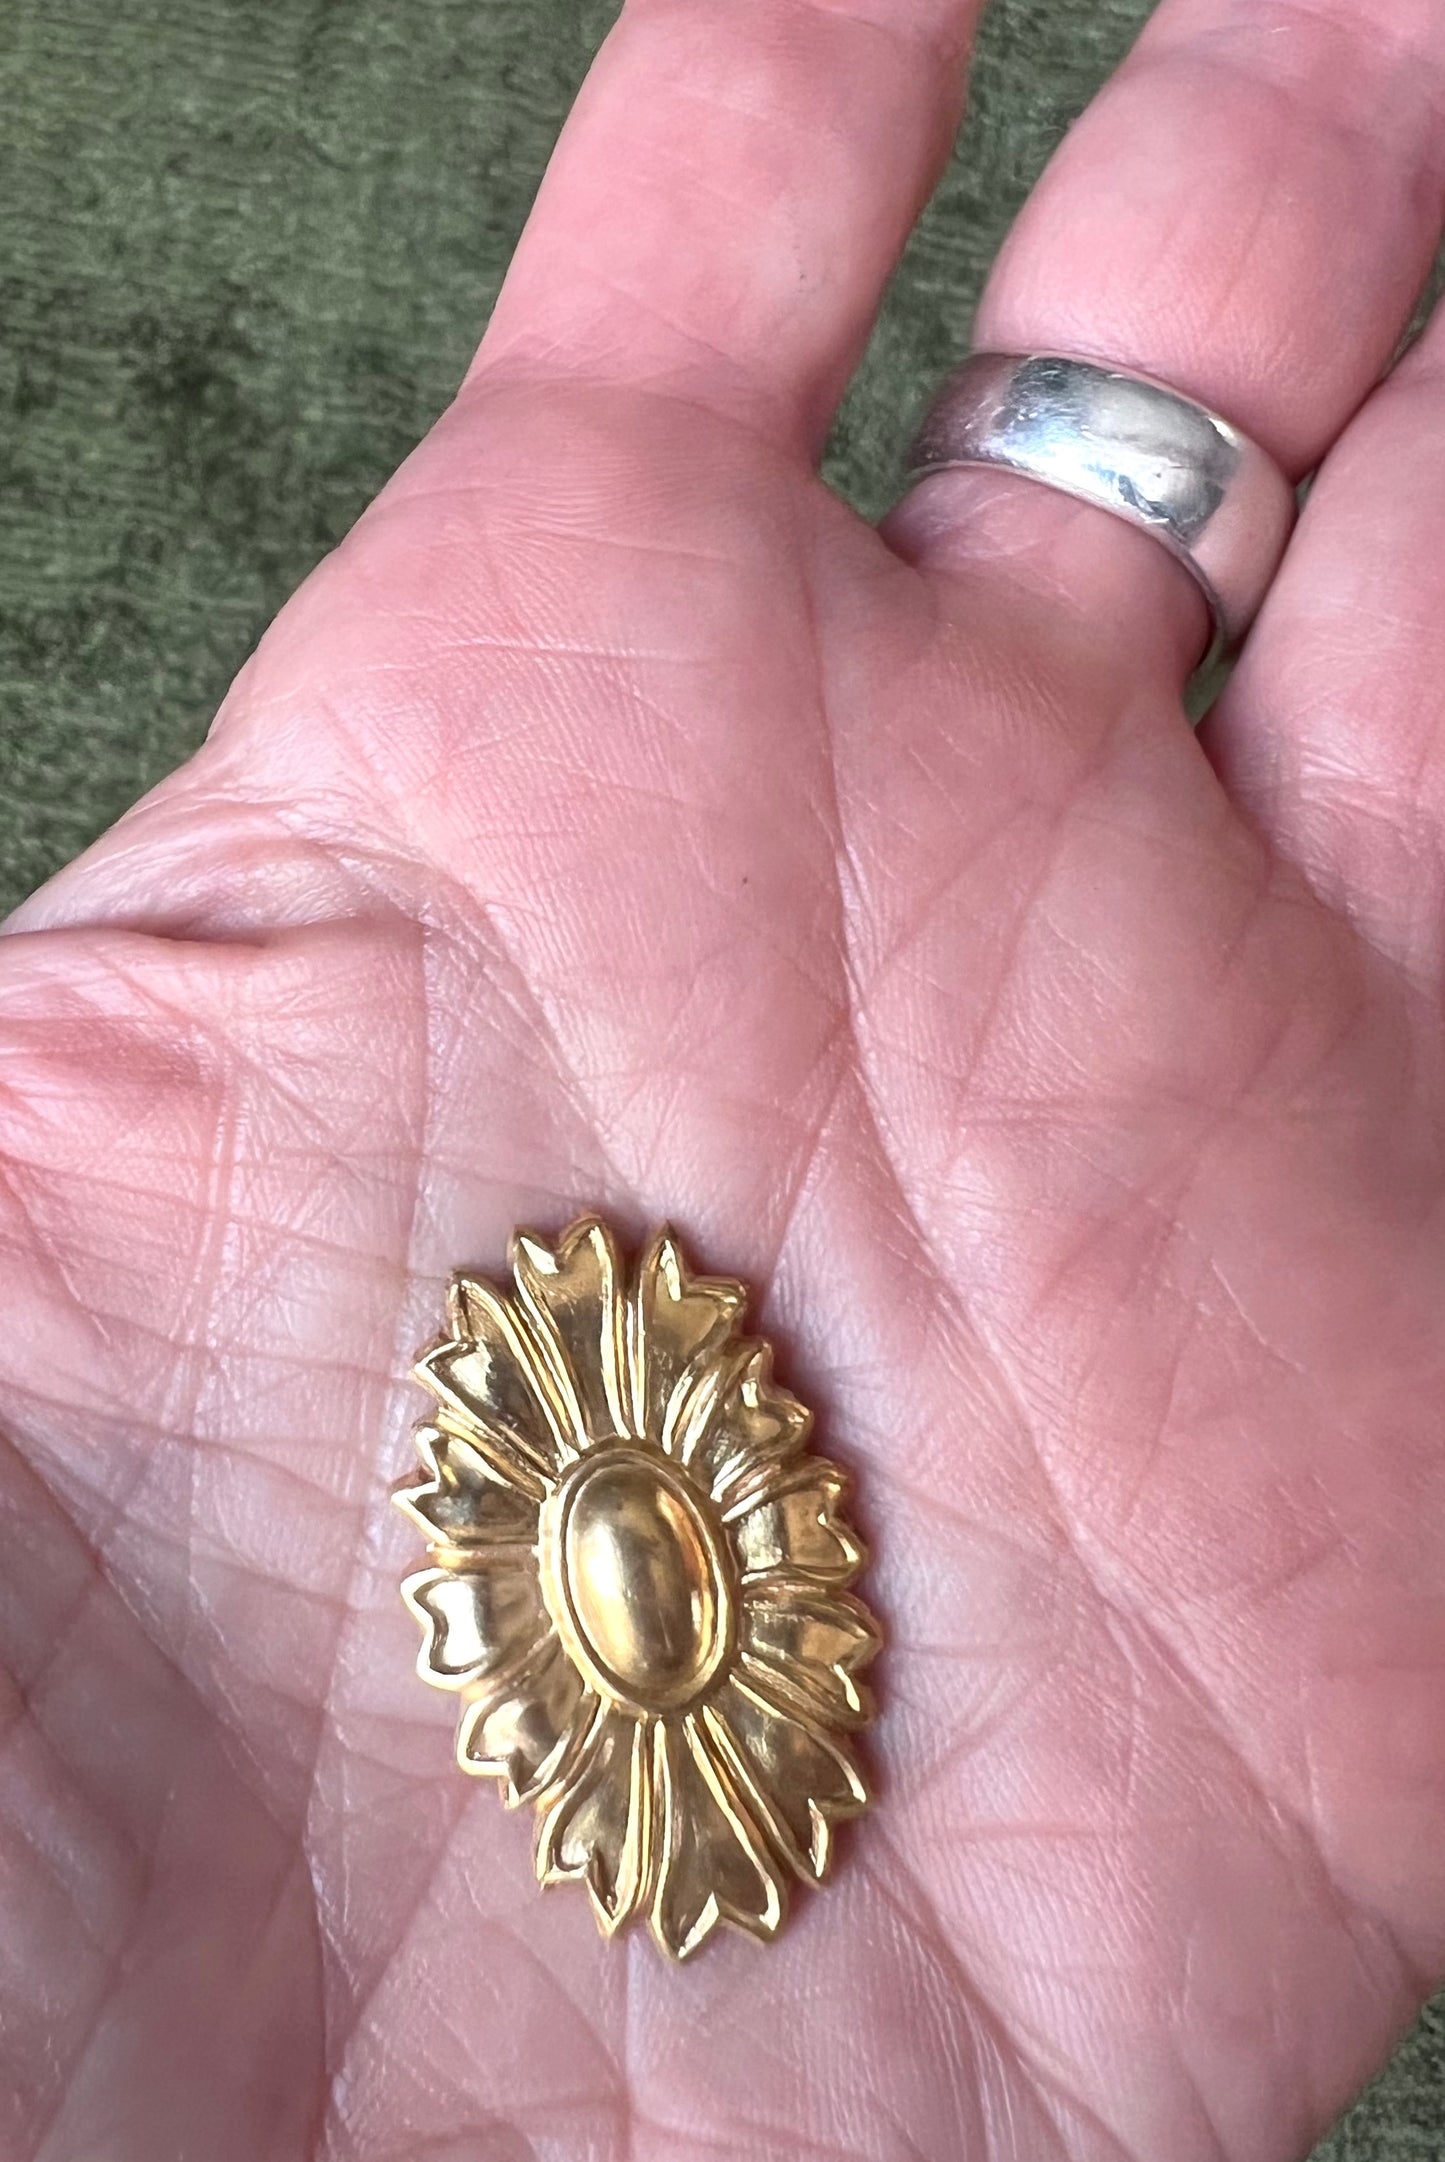 3.2cm Vintage Golden Brass Flower Stamping